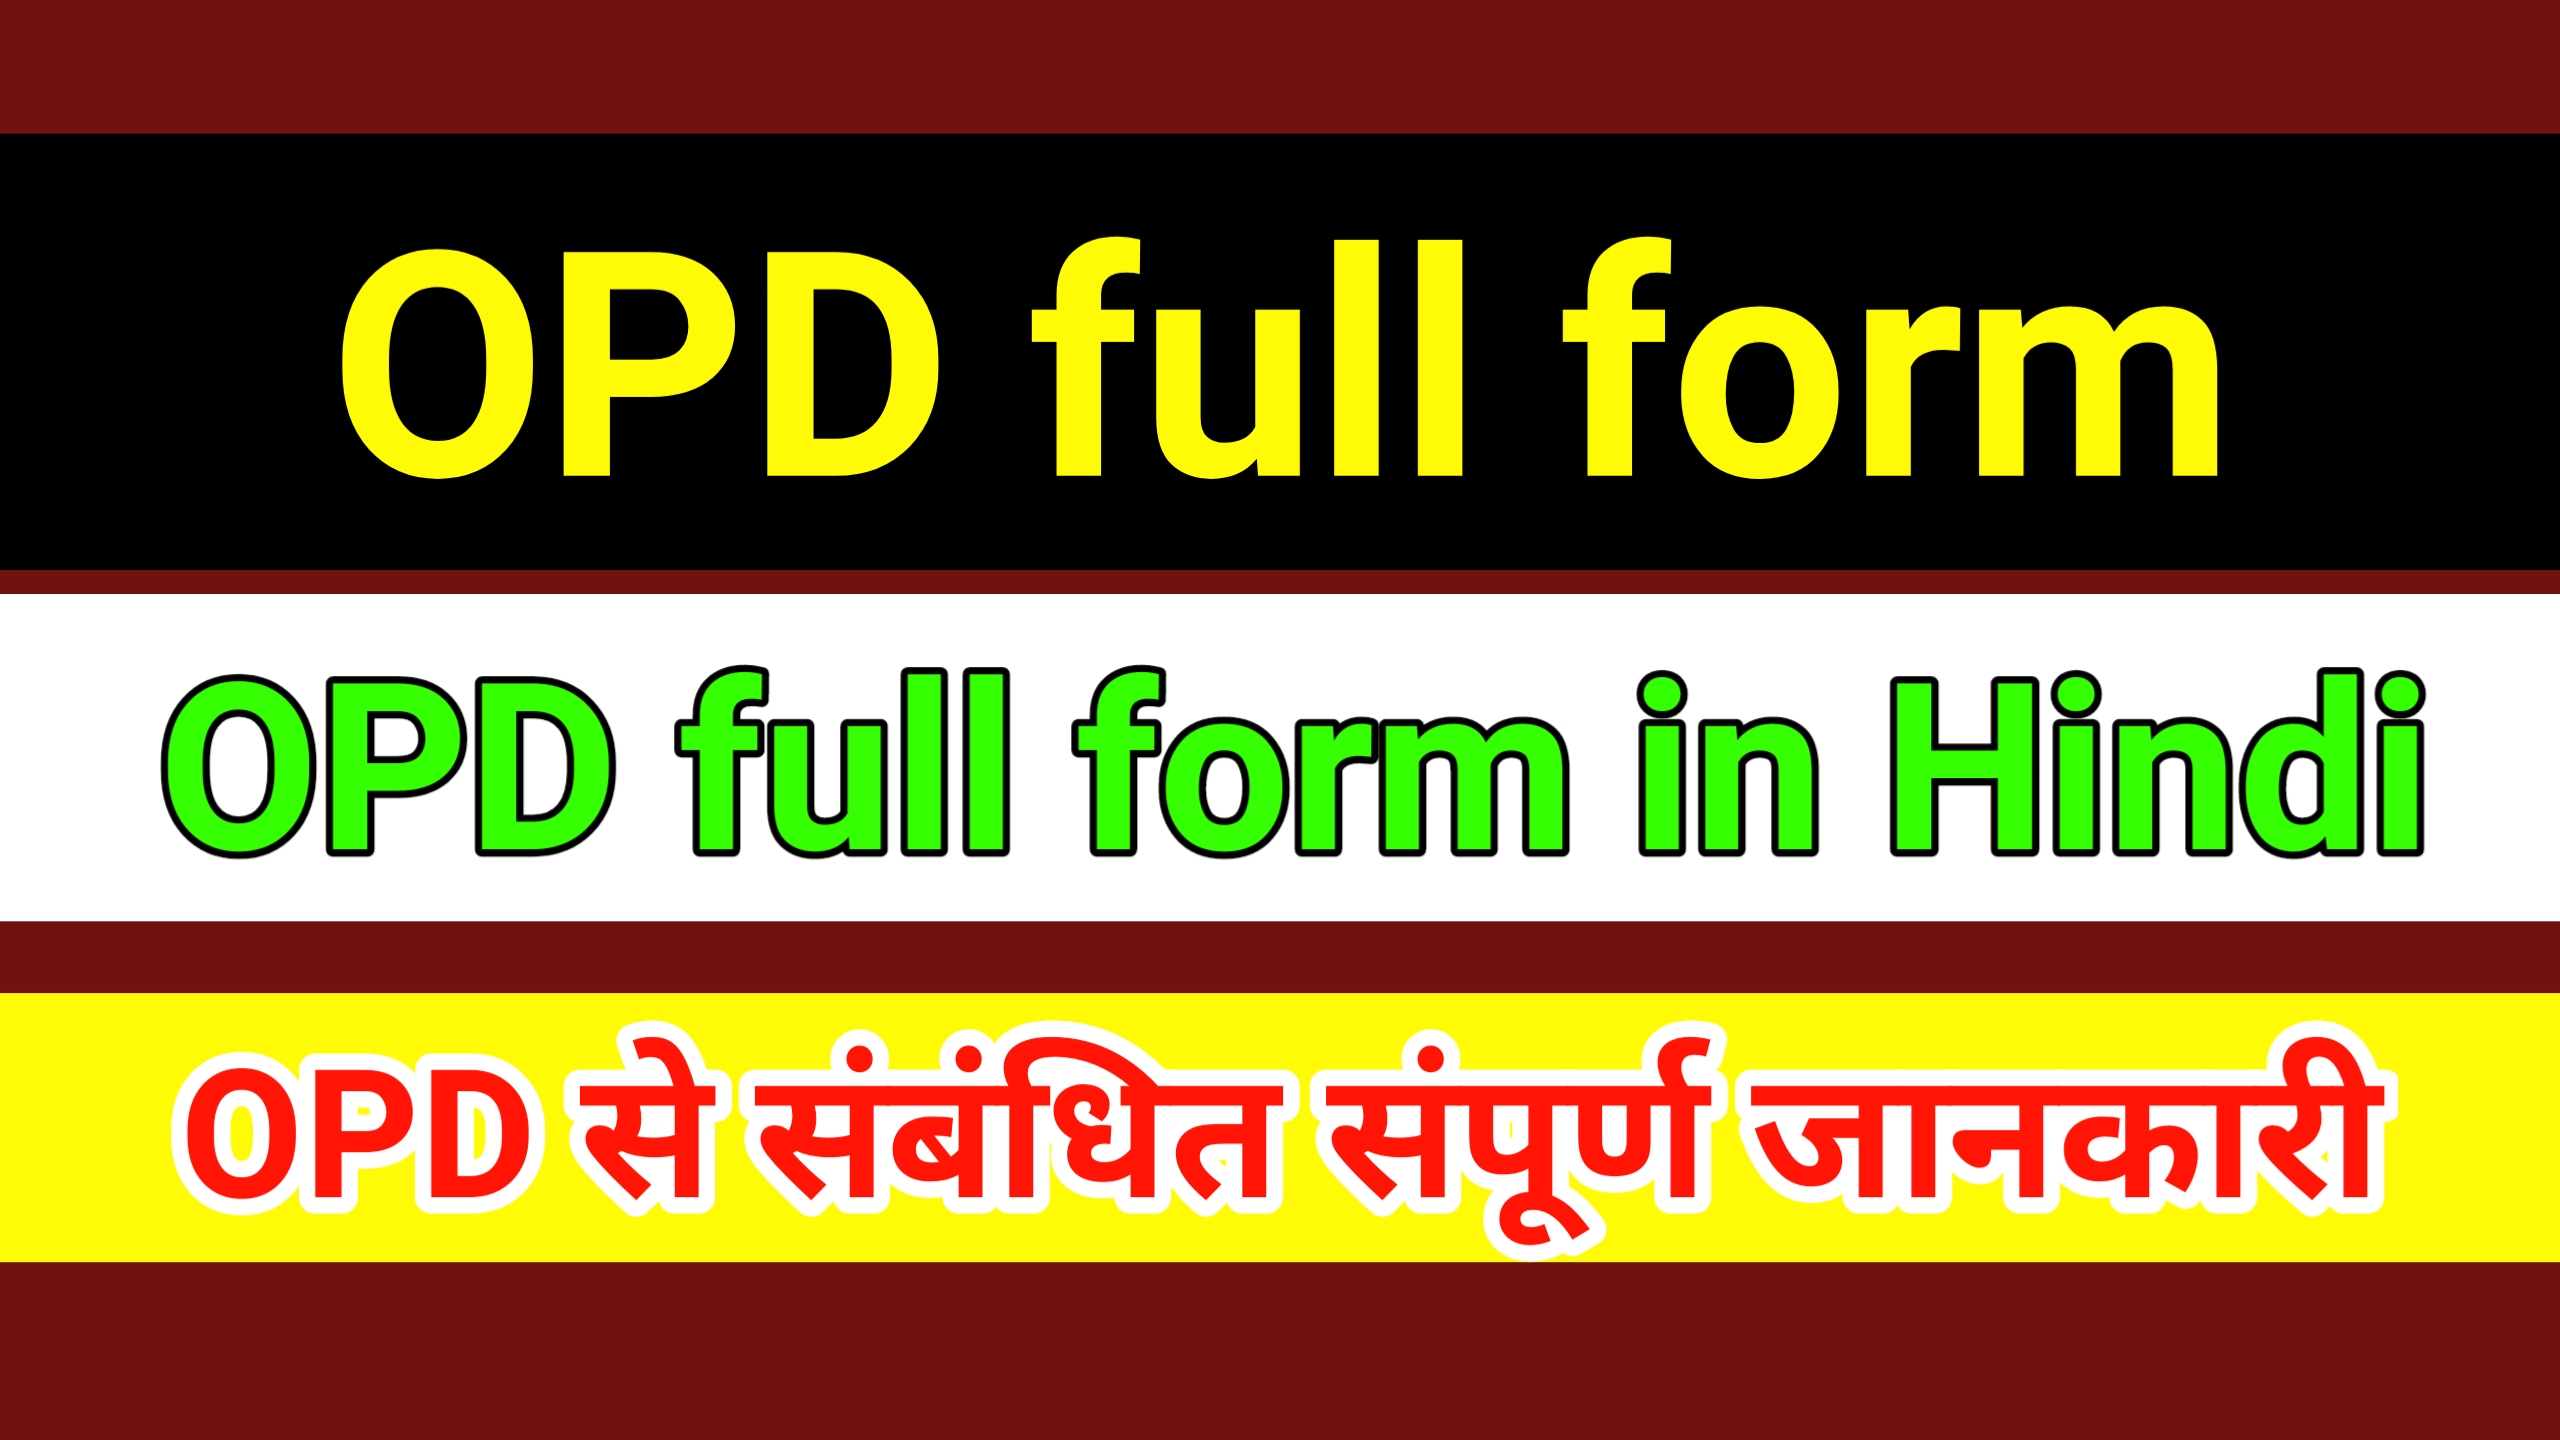 OPD full form in Hindi | OPD full form in hospital,OPD full form Hindi me,ओपीडी फुल फॉर्म क्या होती हैं, ओपीडी क्या होती है,